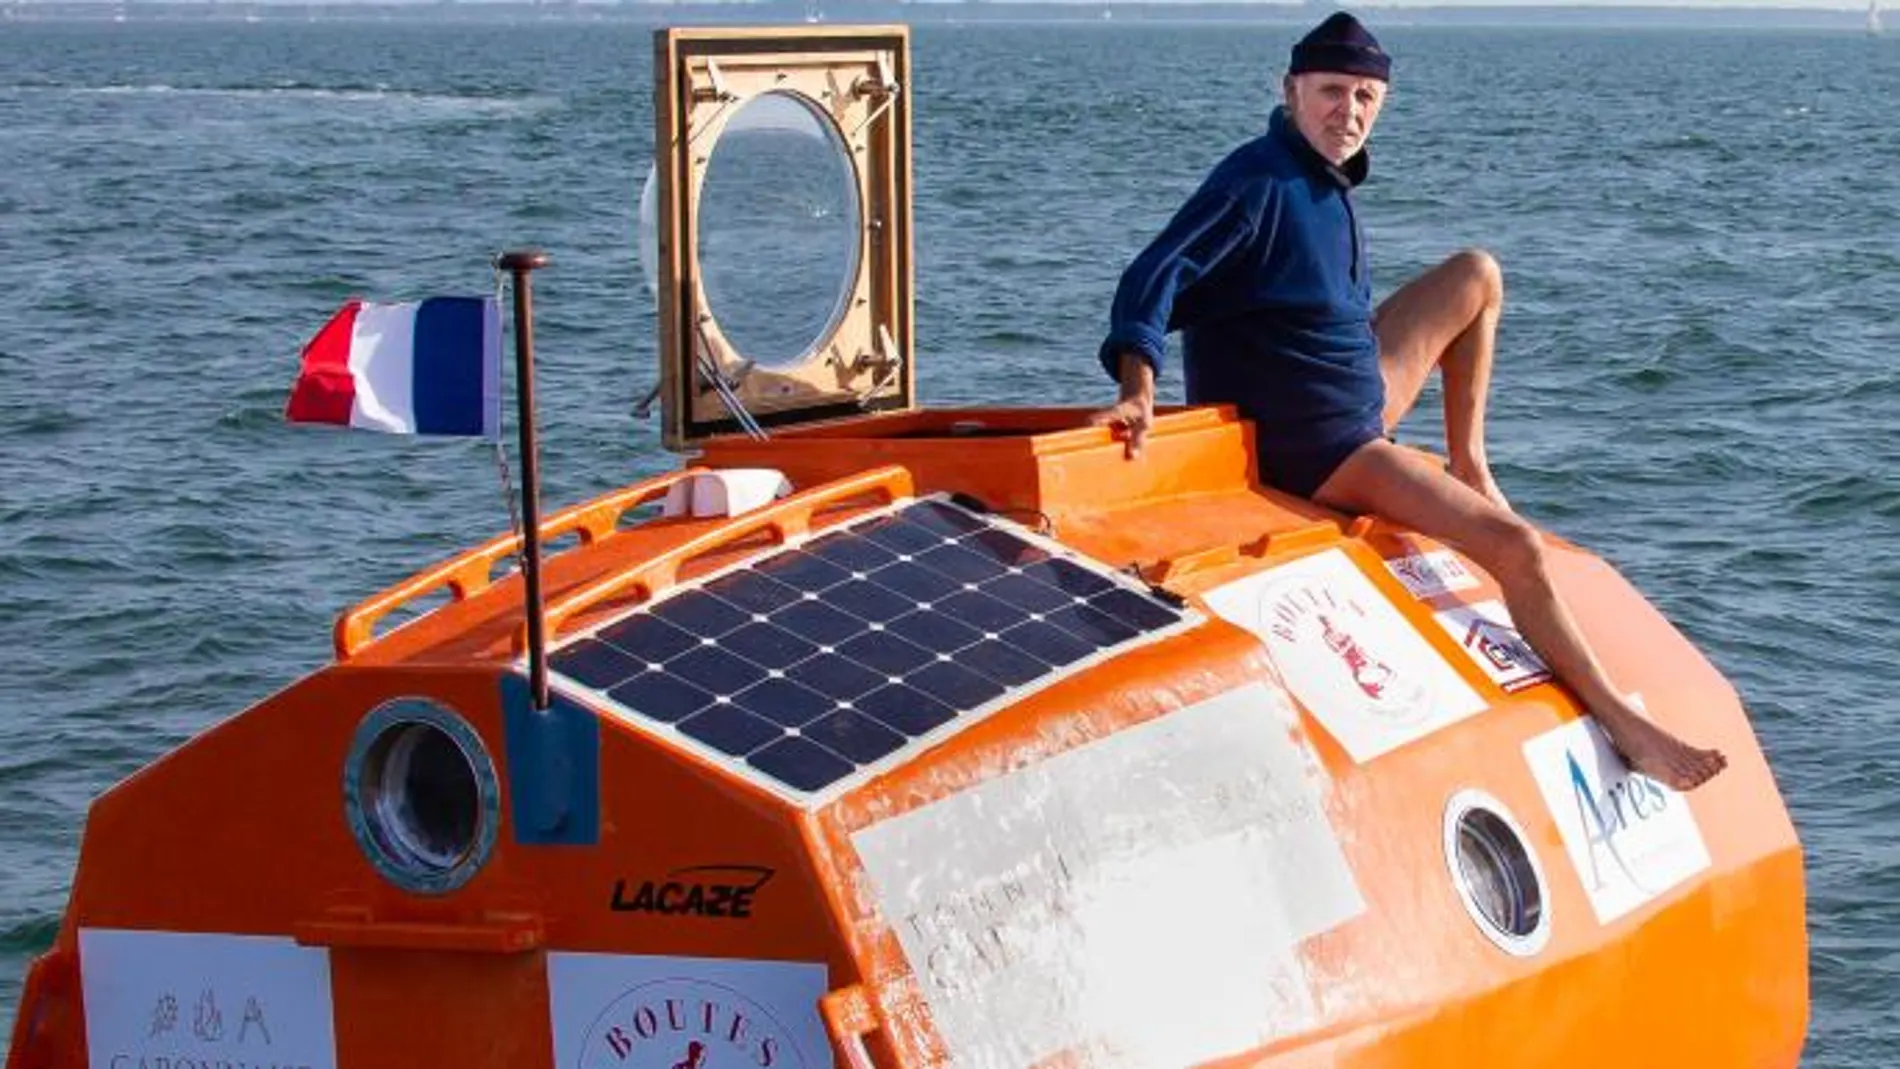 El aventurero francés Jean Jacques Savin cruzó el Atlántico a bordo de un barril gigante en 2019